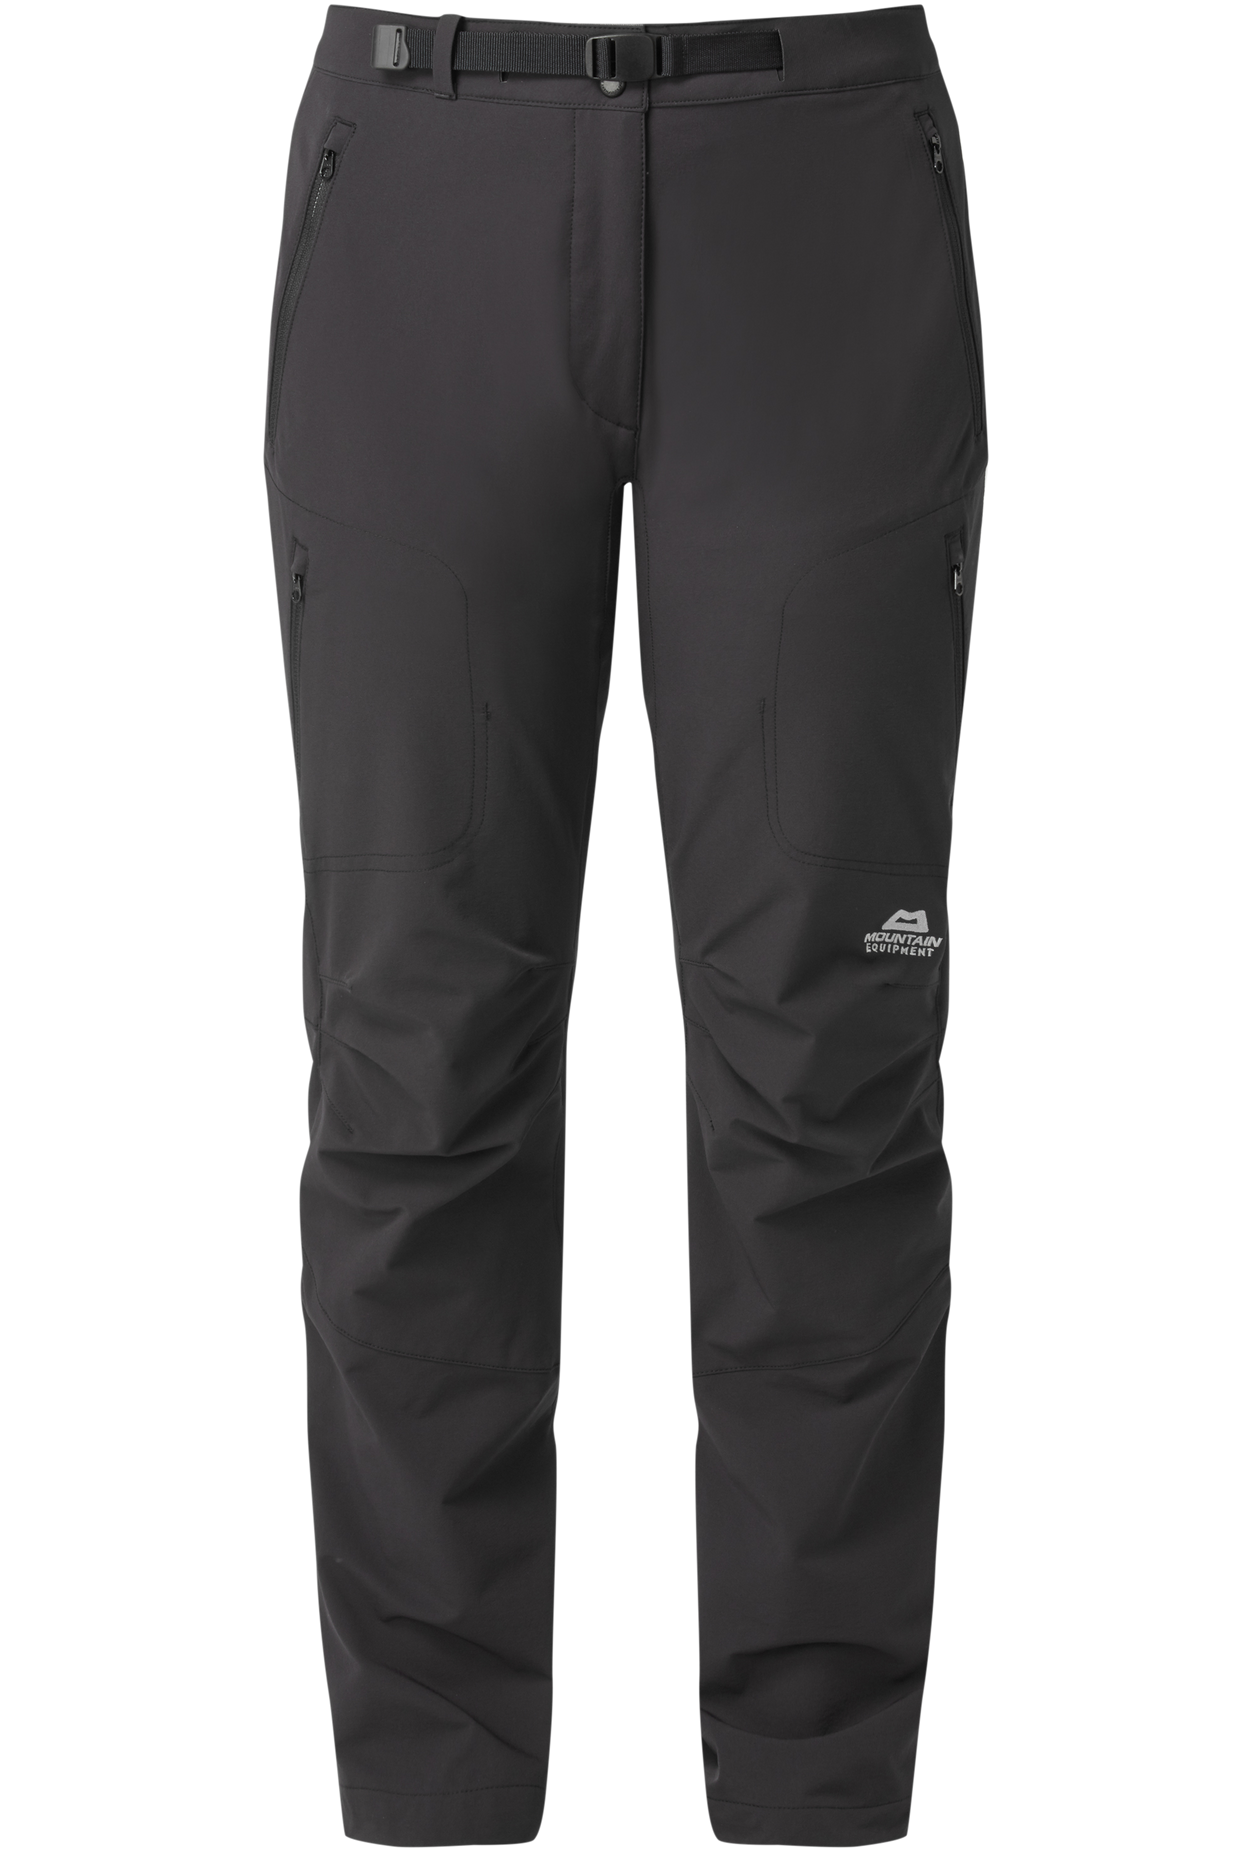 Mountain Equipment dámské softshellové kalhoty Chamois Wmns Pant Barva: black, Velikost: 12/M